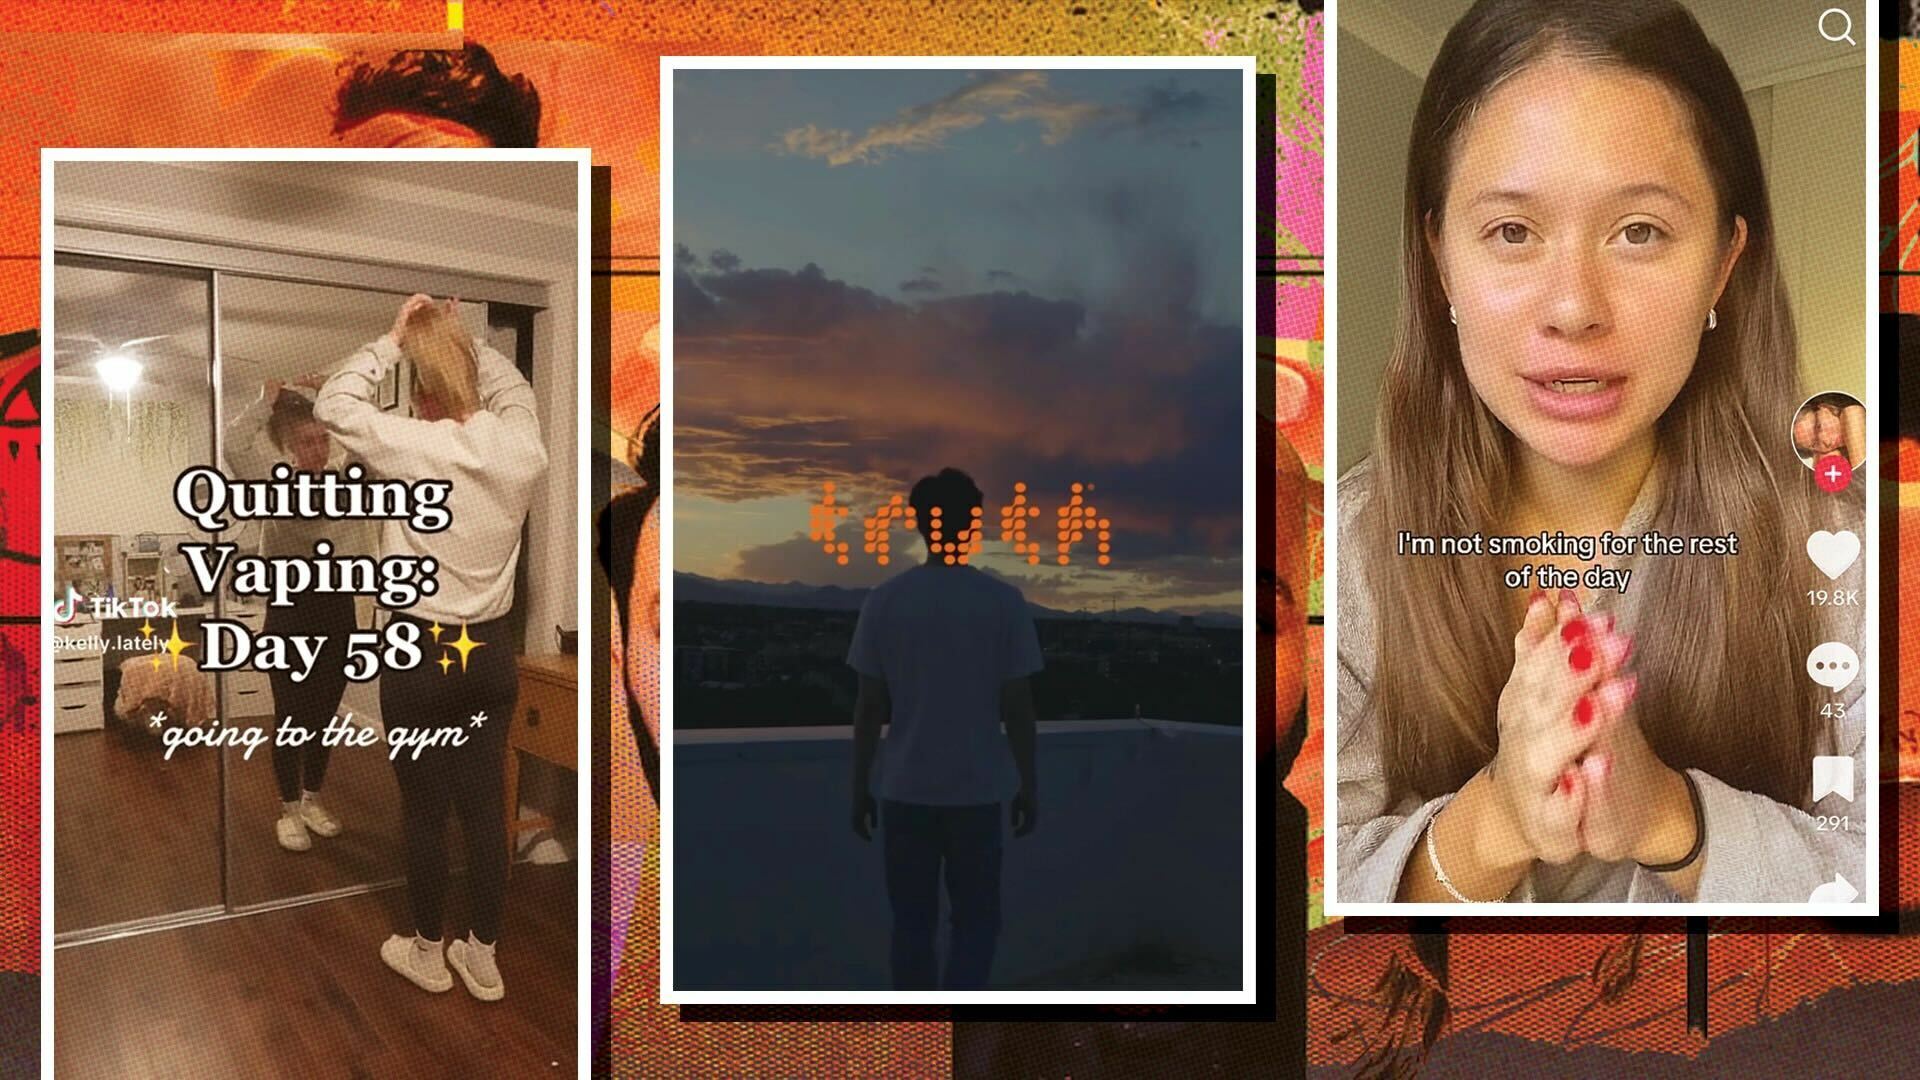 Three screenshots of tiktok videos in the article on textured orange background